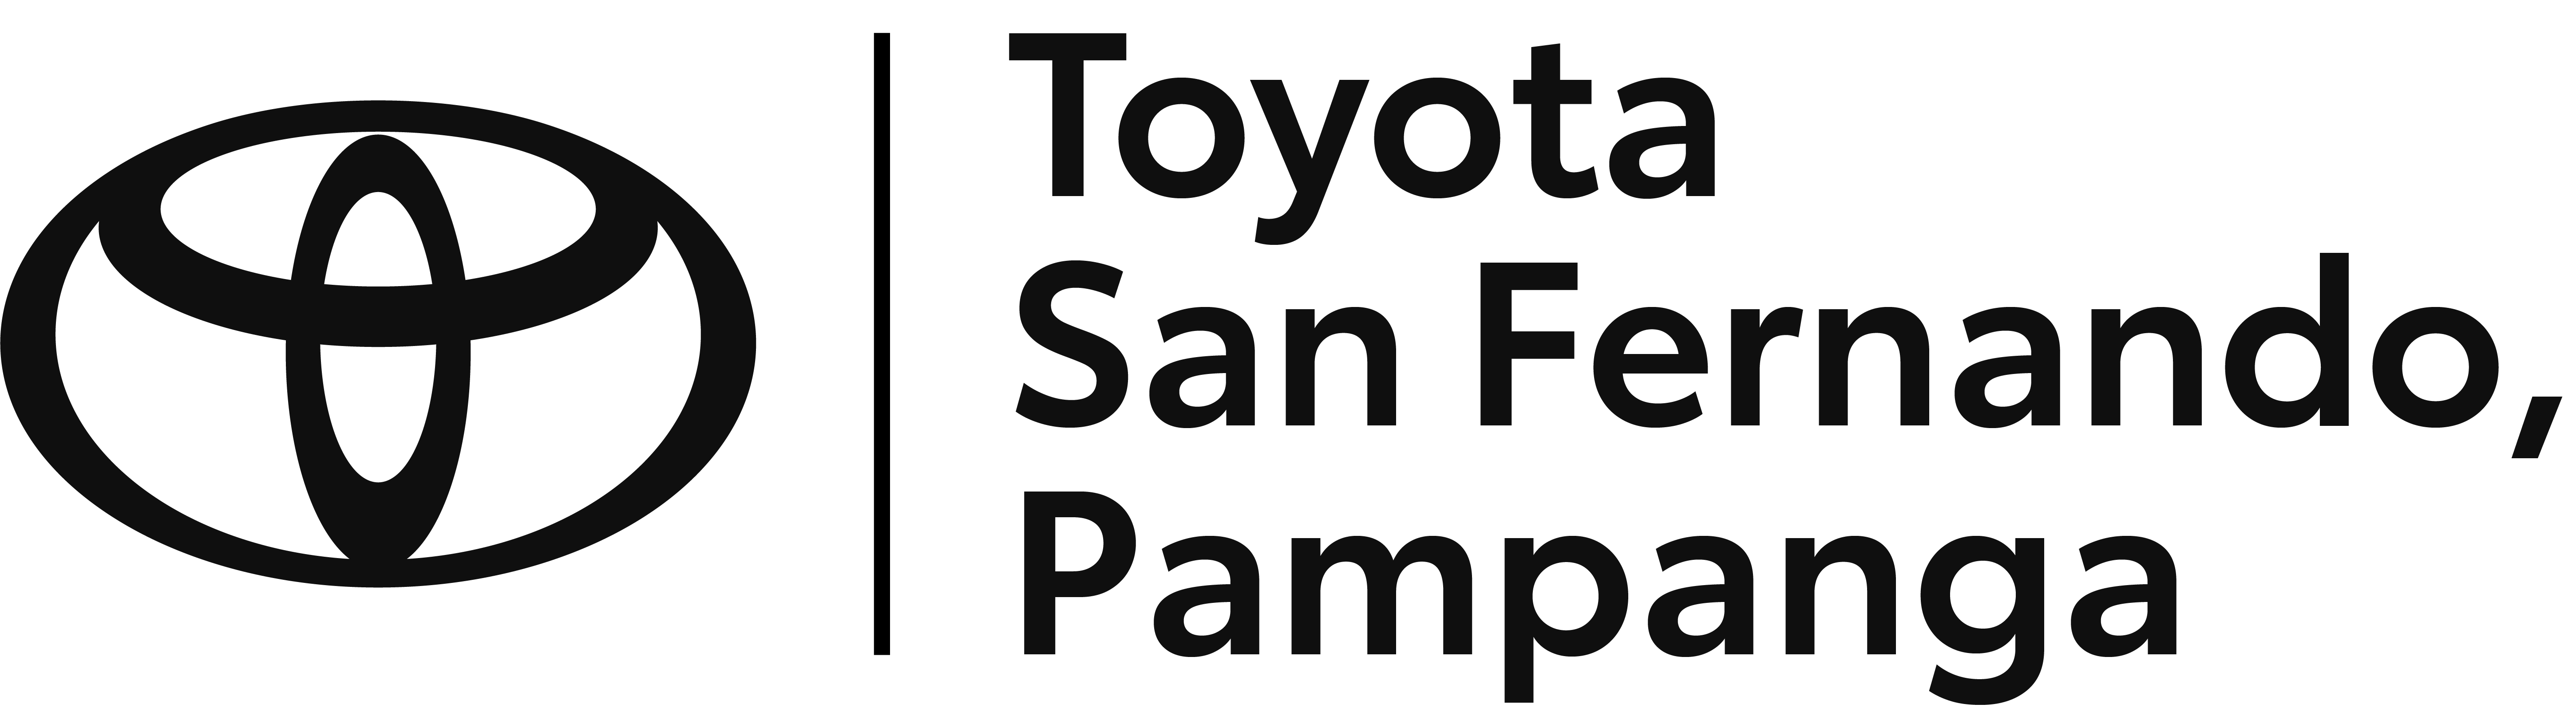 Toyota City of San Fernando Pampanga